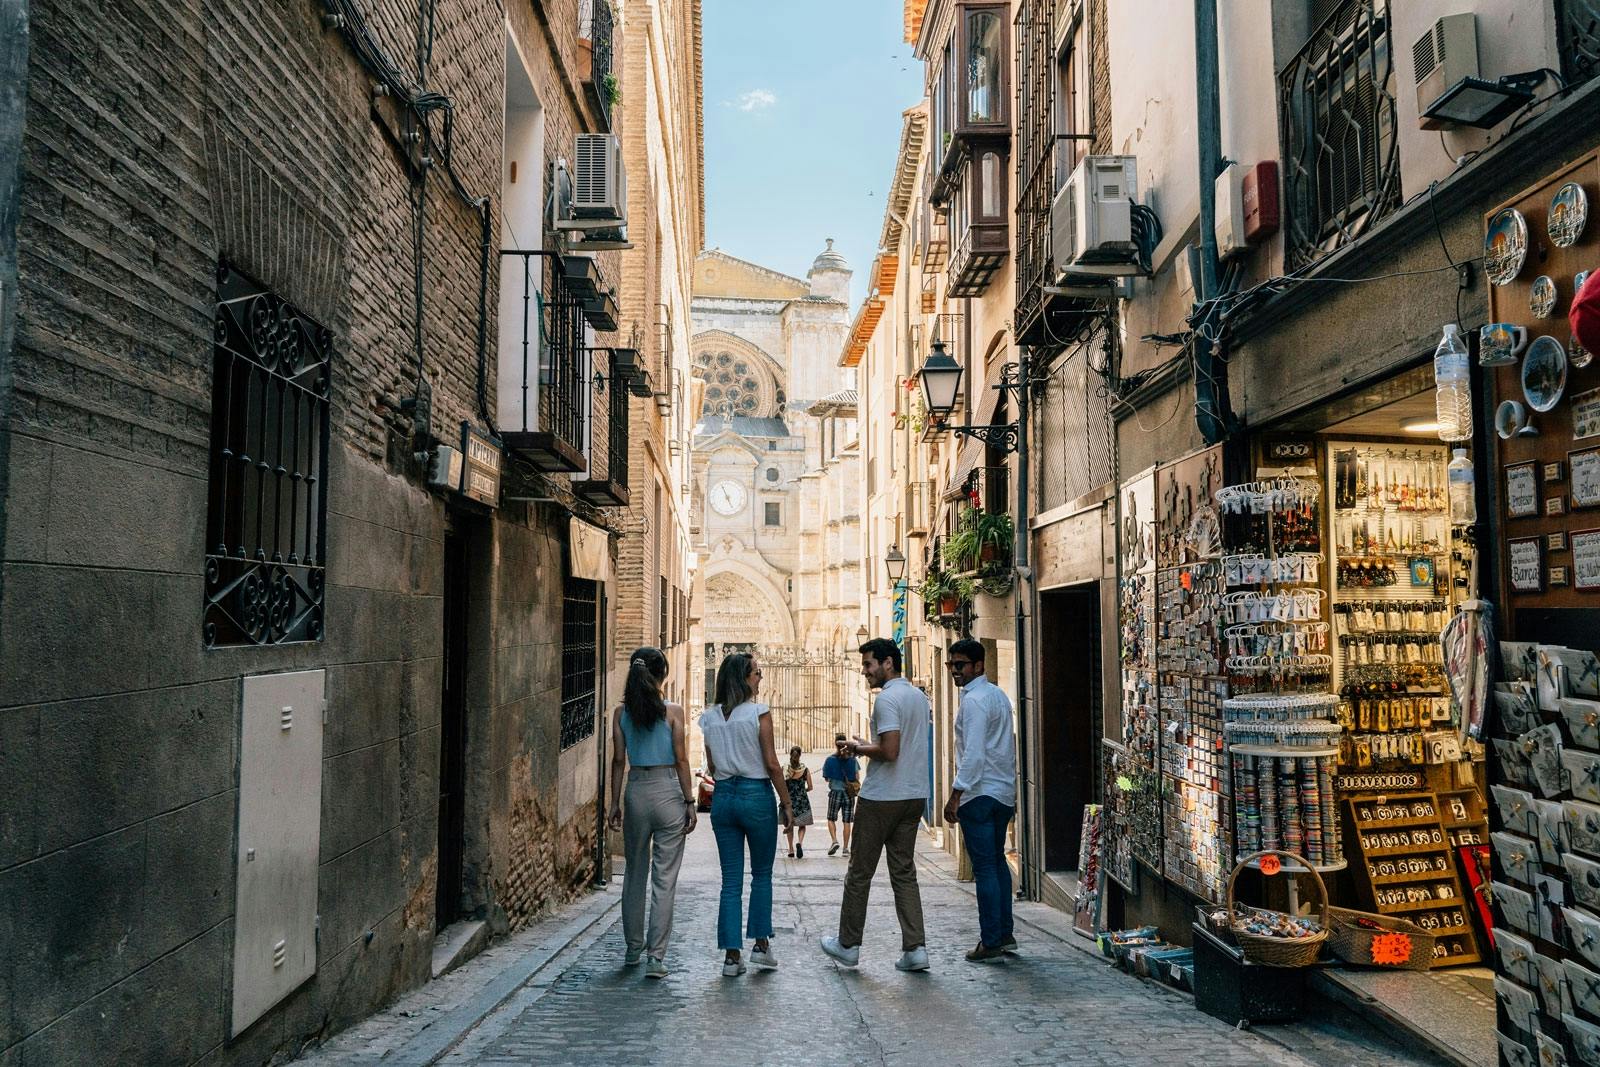 Segovia, Ávila and Toledo tour from Madrid